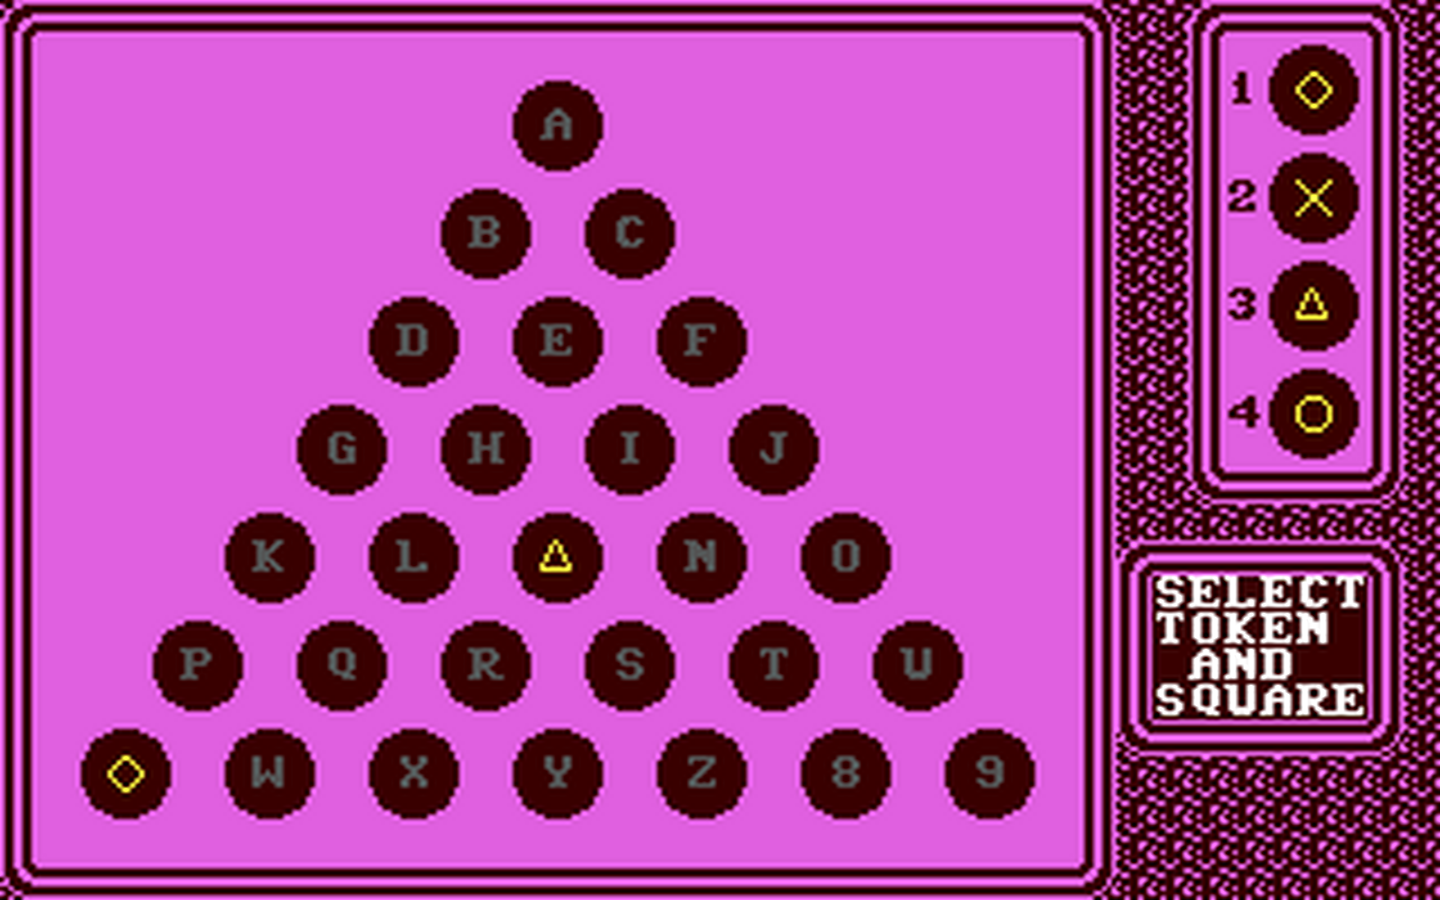 C64 GameBase Triangulation Loadstar/Softdisk_Publishing,_Inc. 1990